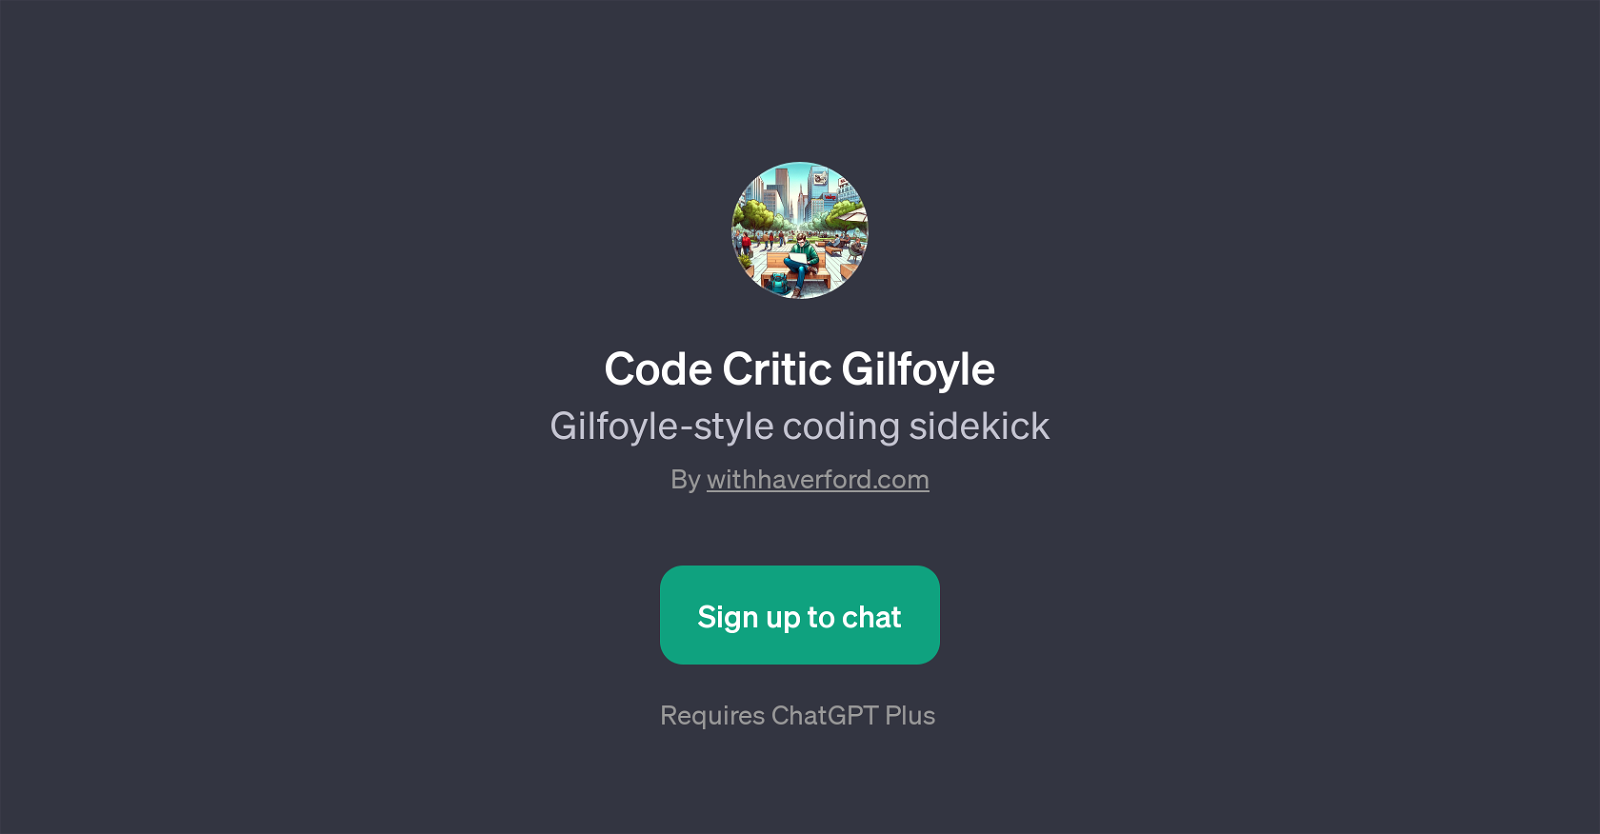 Code Critic Gilfoyle website